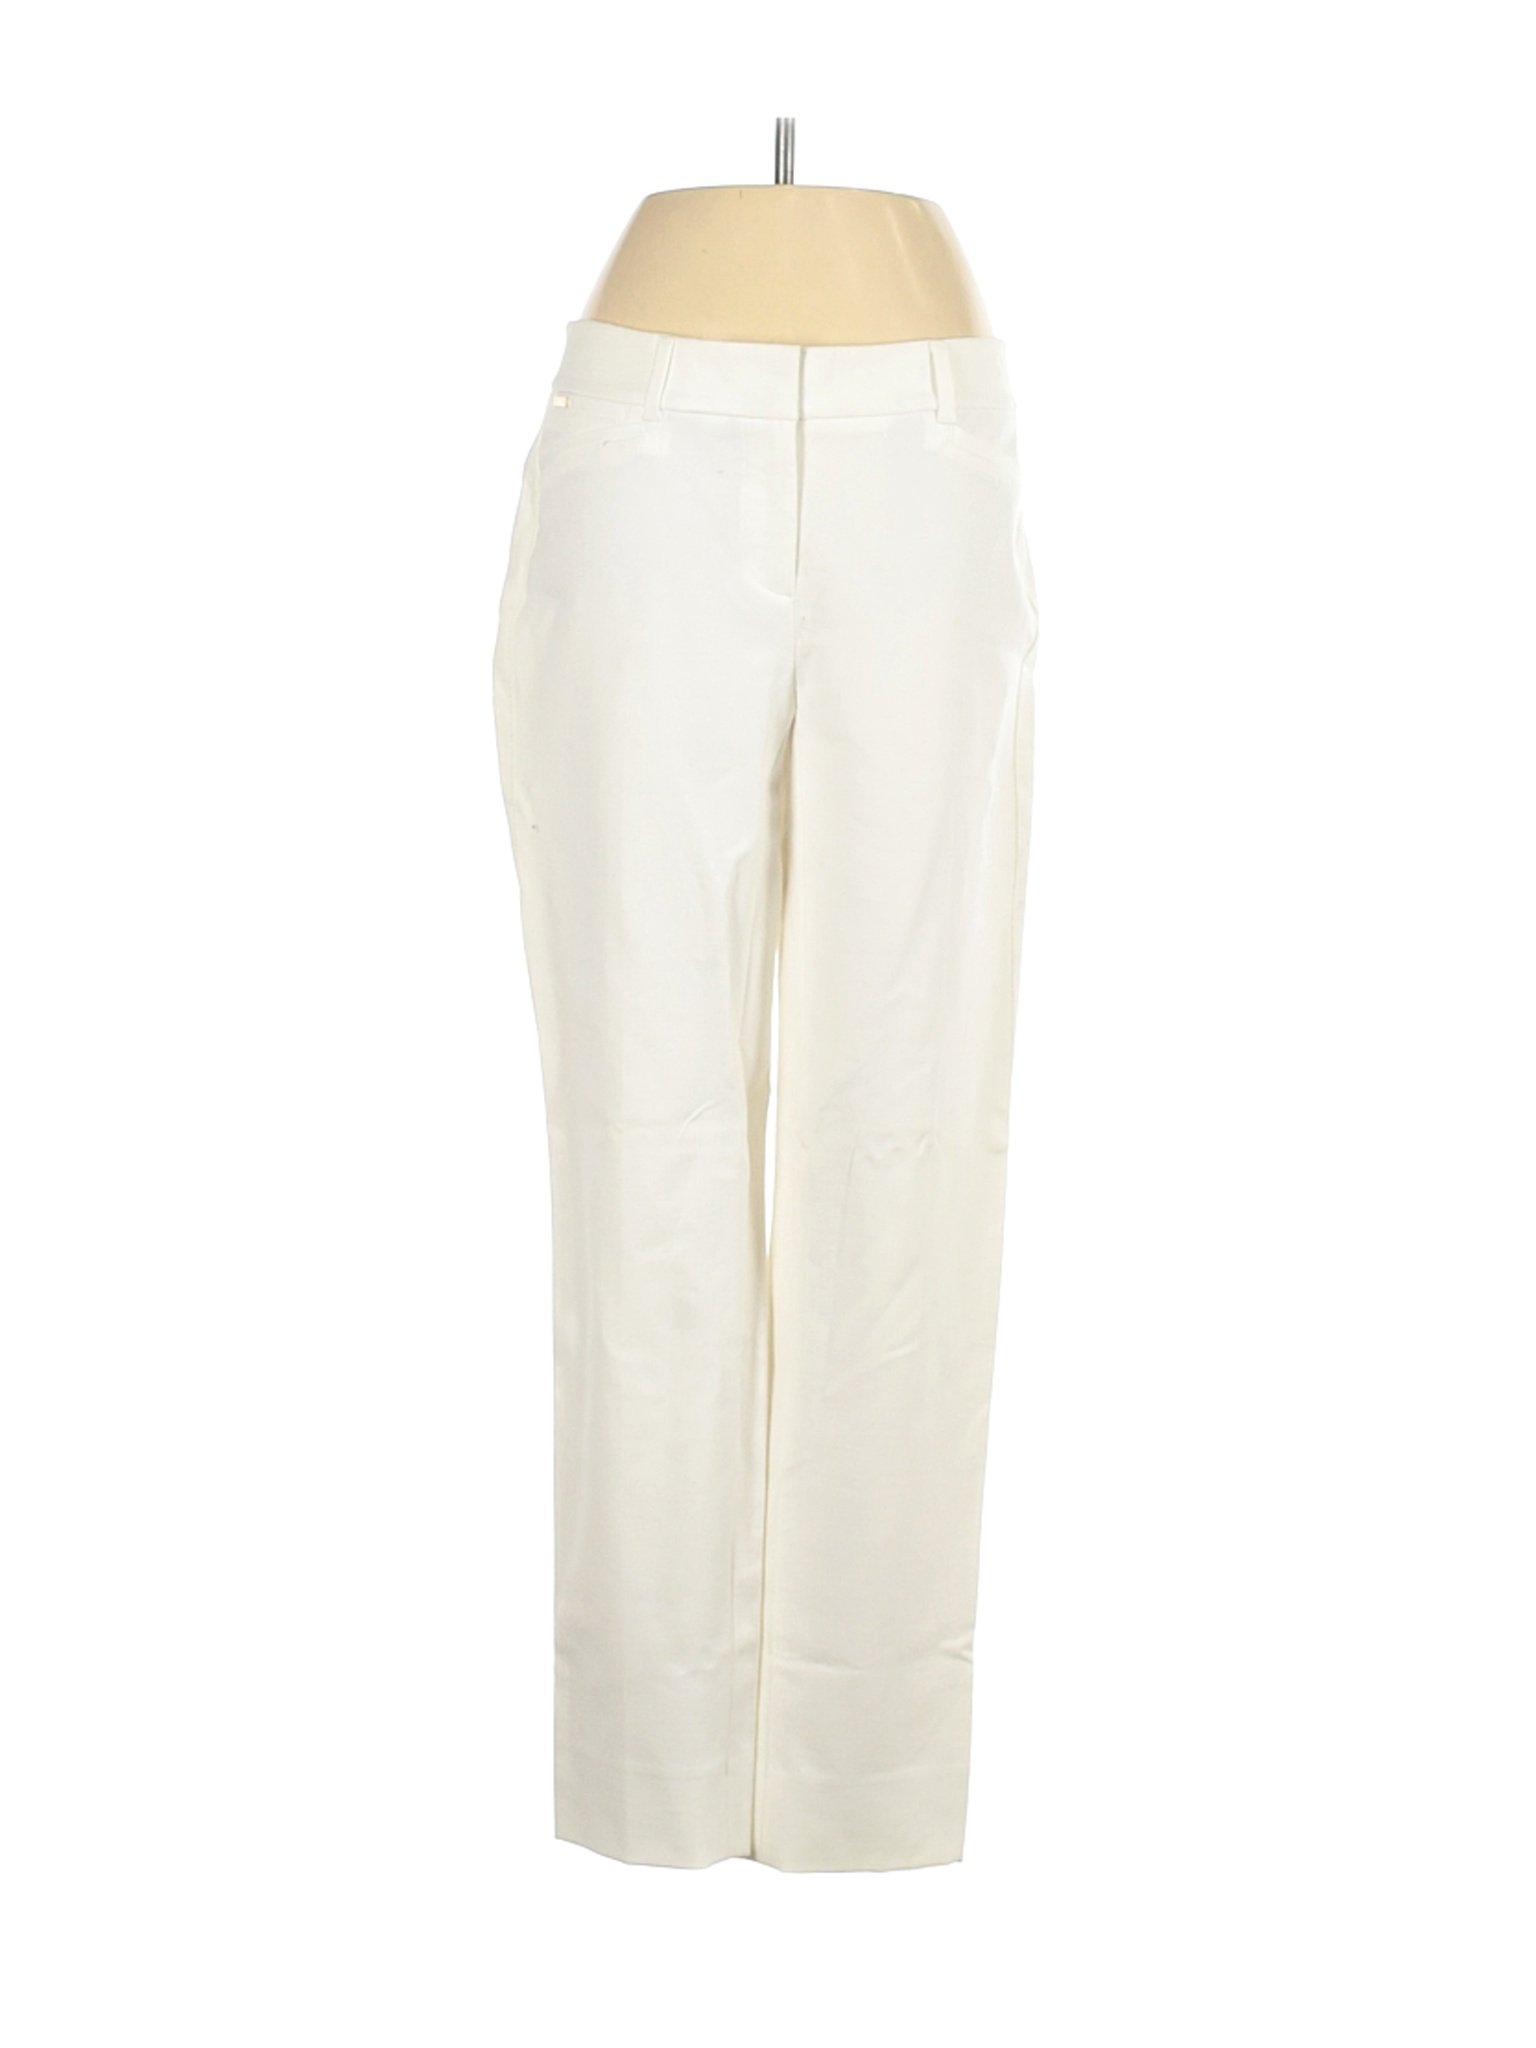 NWT White House Black Market Women White Dress Pants 0 | eBay